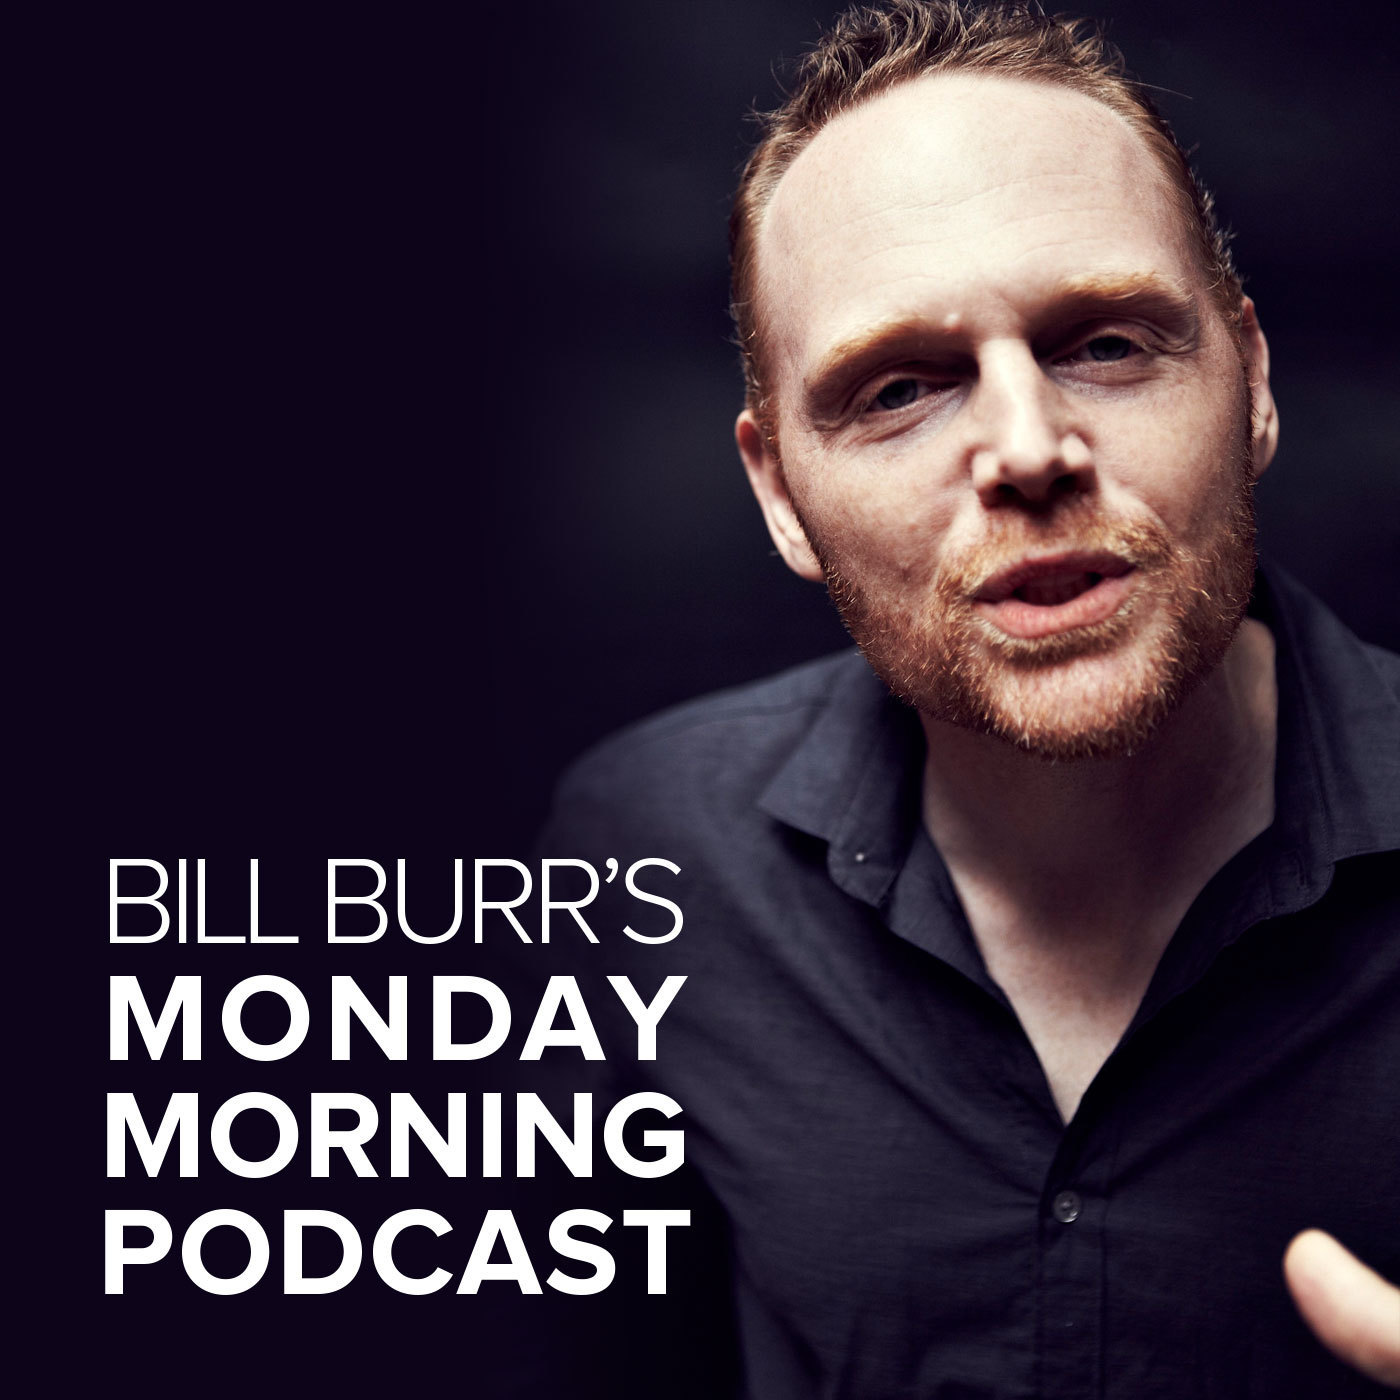 Monday Morning Podcast 4-27-11